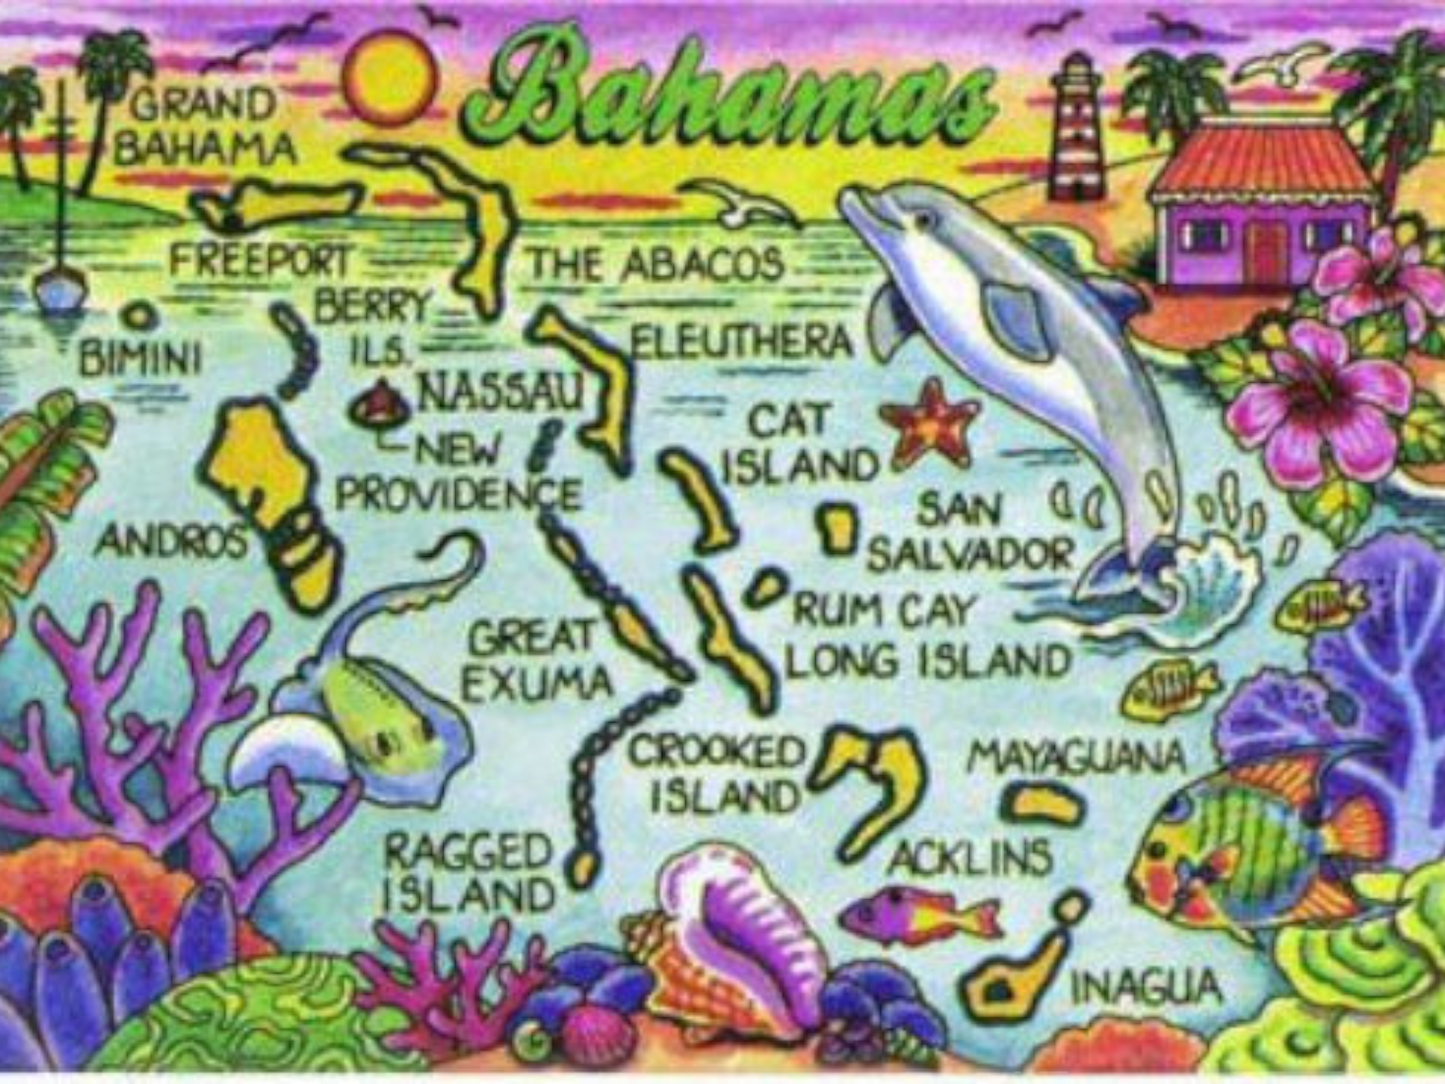 Bahamas Map Caribbean Fridge Collector's Souvenir Magnet 2.5 inches X 3.5 inches